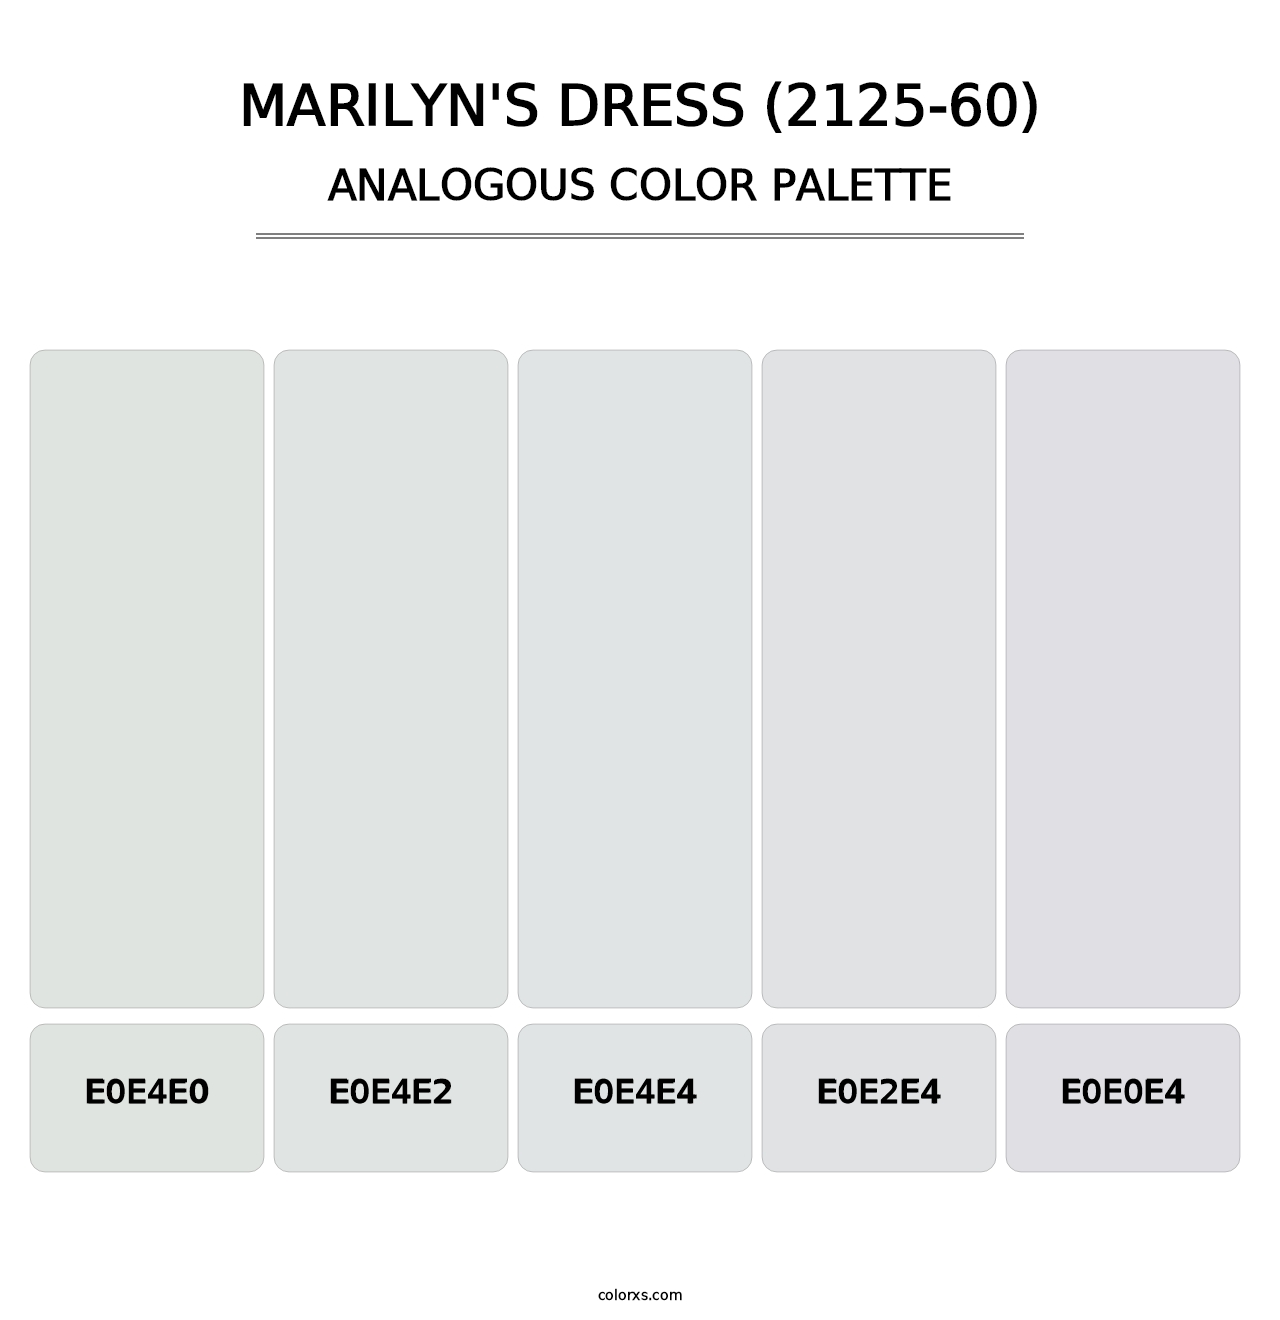 Marilyn's Dress (2125-60) - Analogous Color Palette